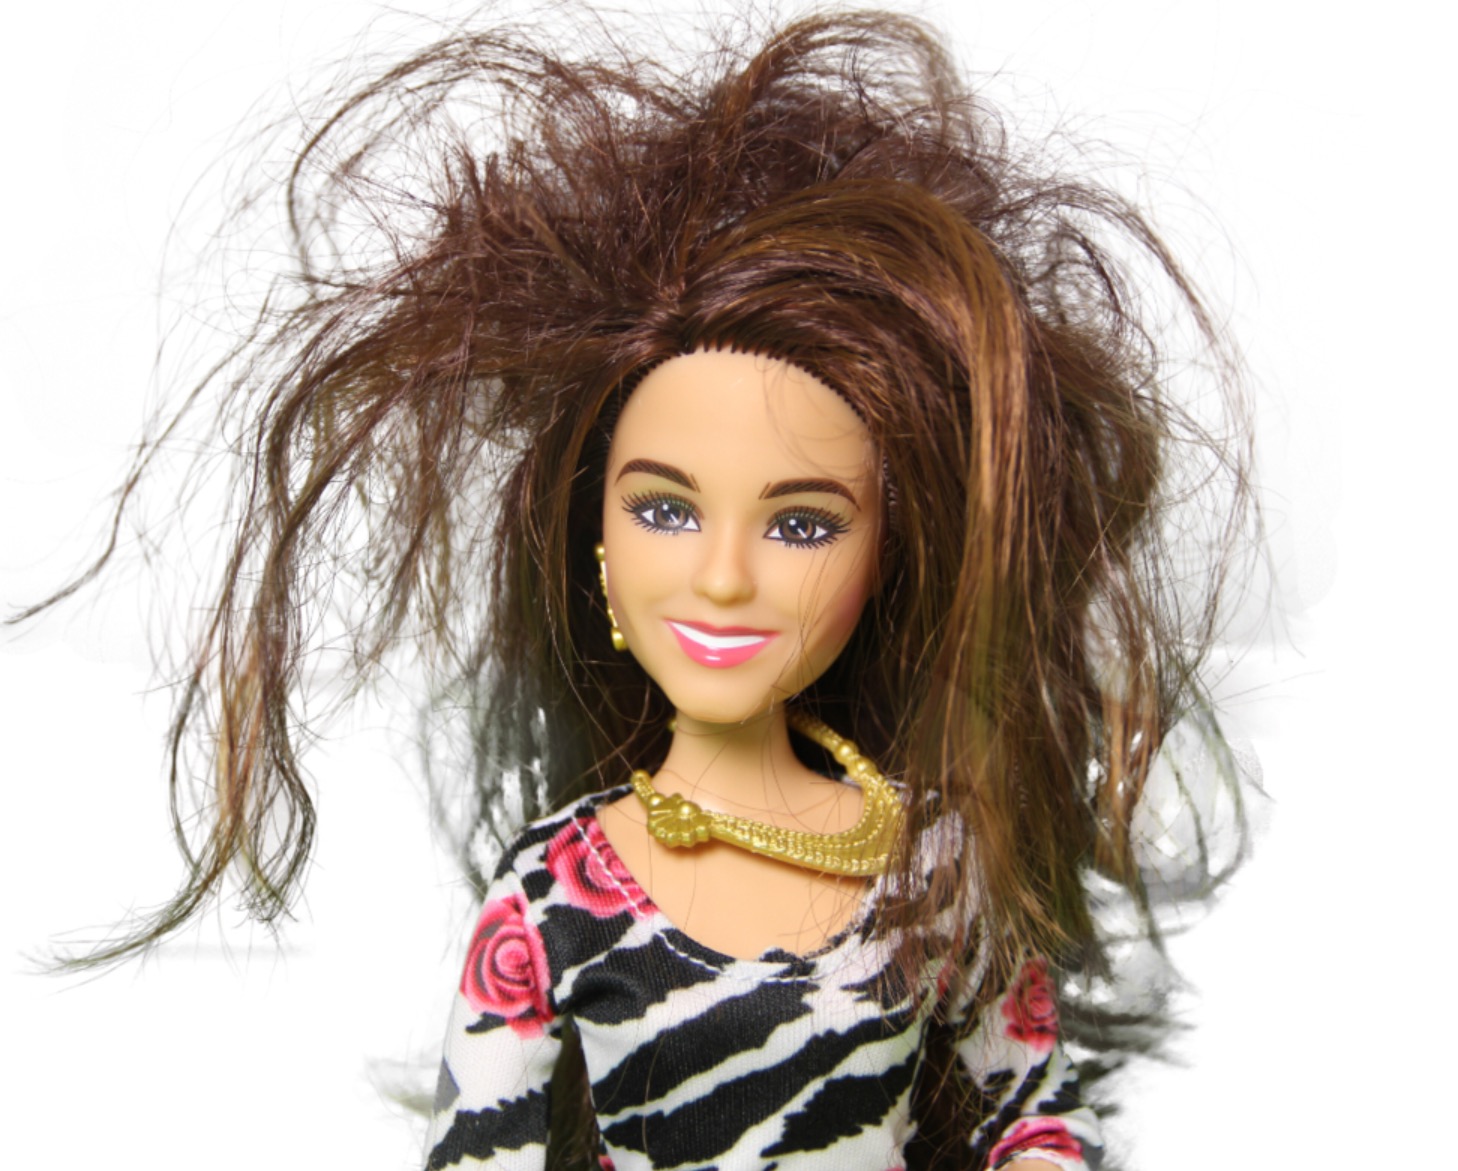 Messy Barbie. 